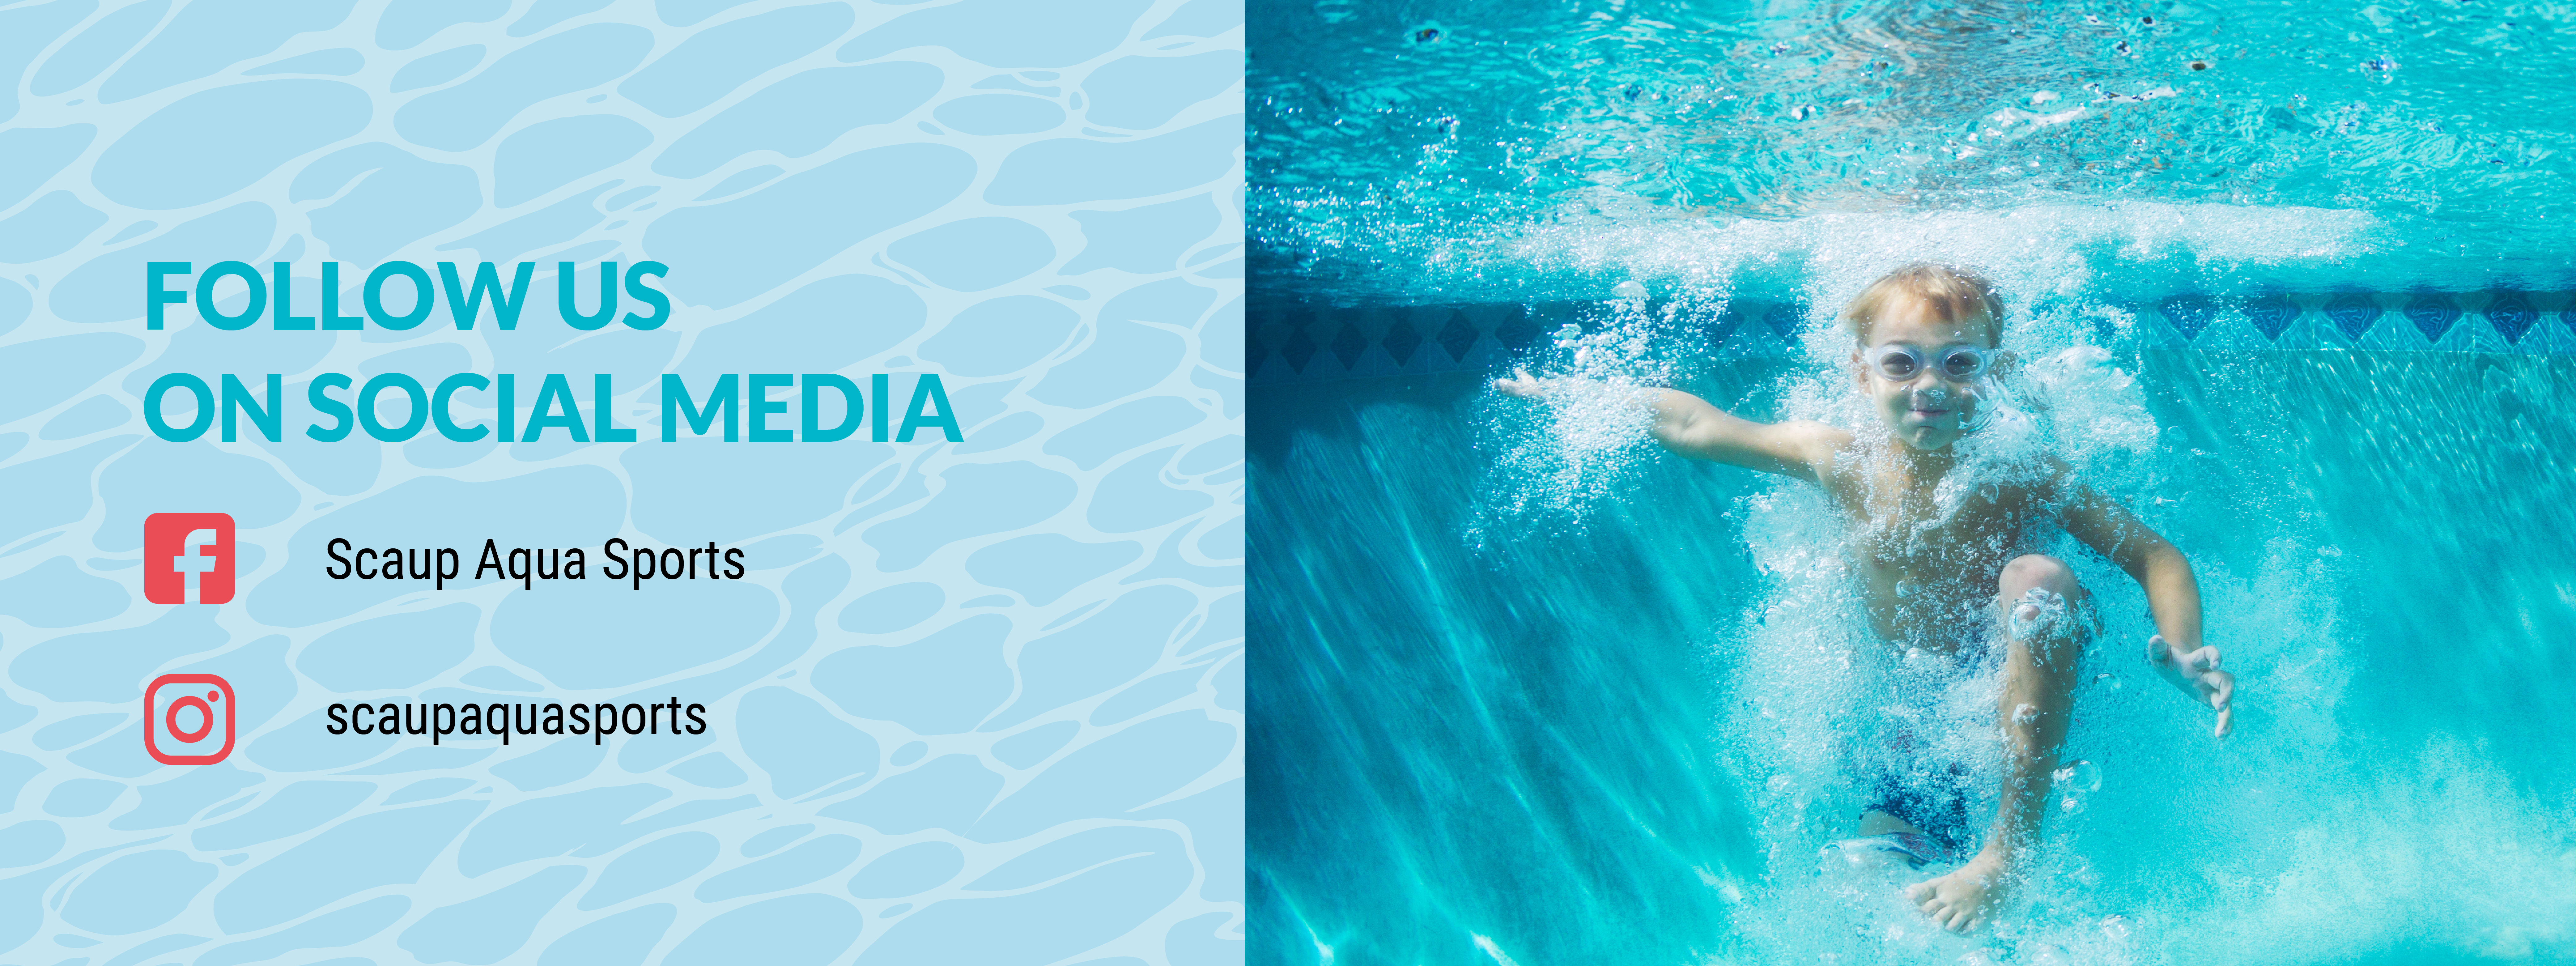 Scaup Aqua Sports - Follow Us